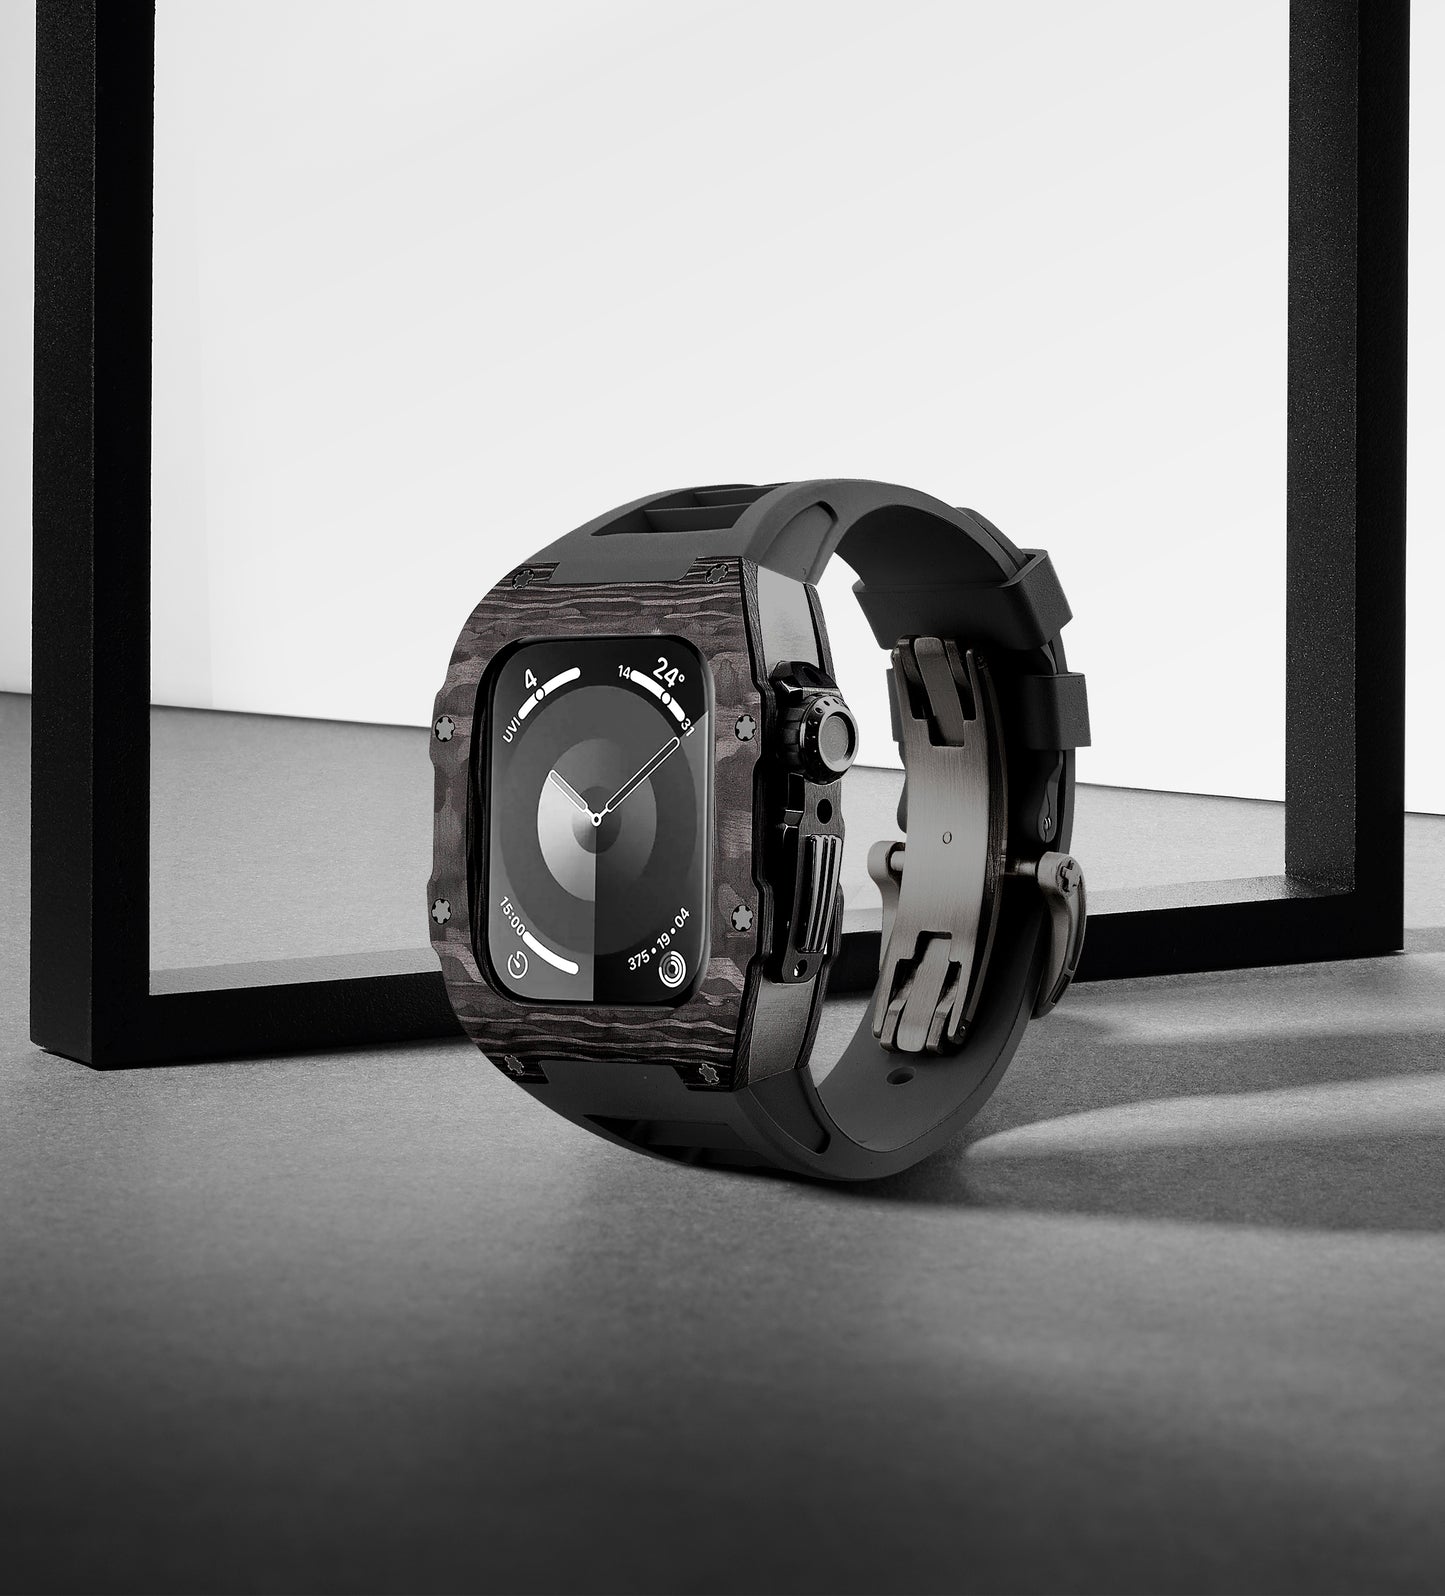 Apple Watch Case 44mm - Carbon Fiber Ti Black Case + Yellow Fluoro Strap (8 Screws)